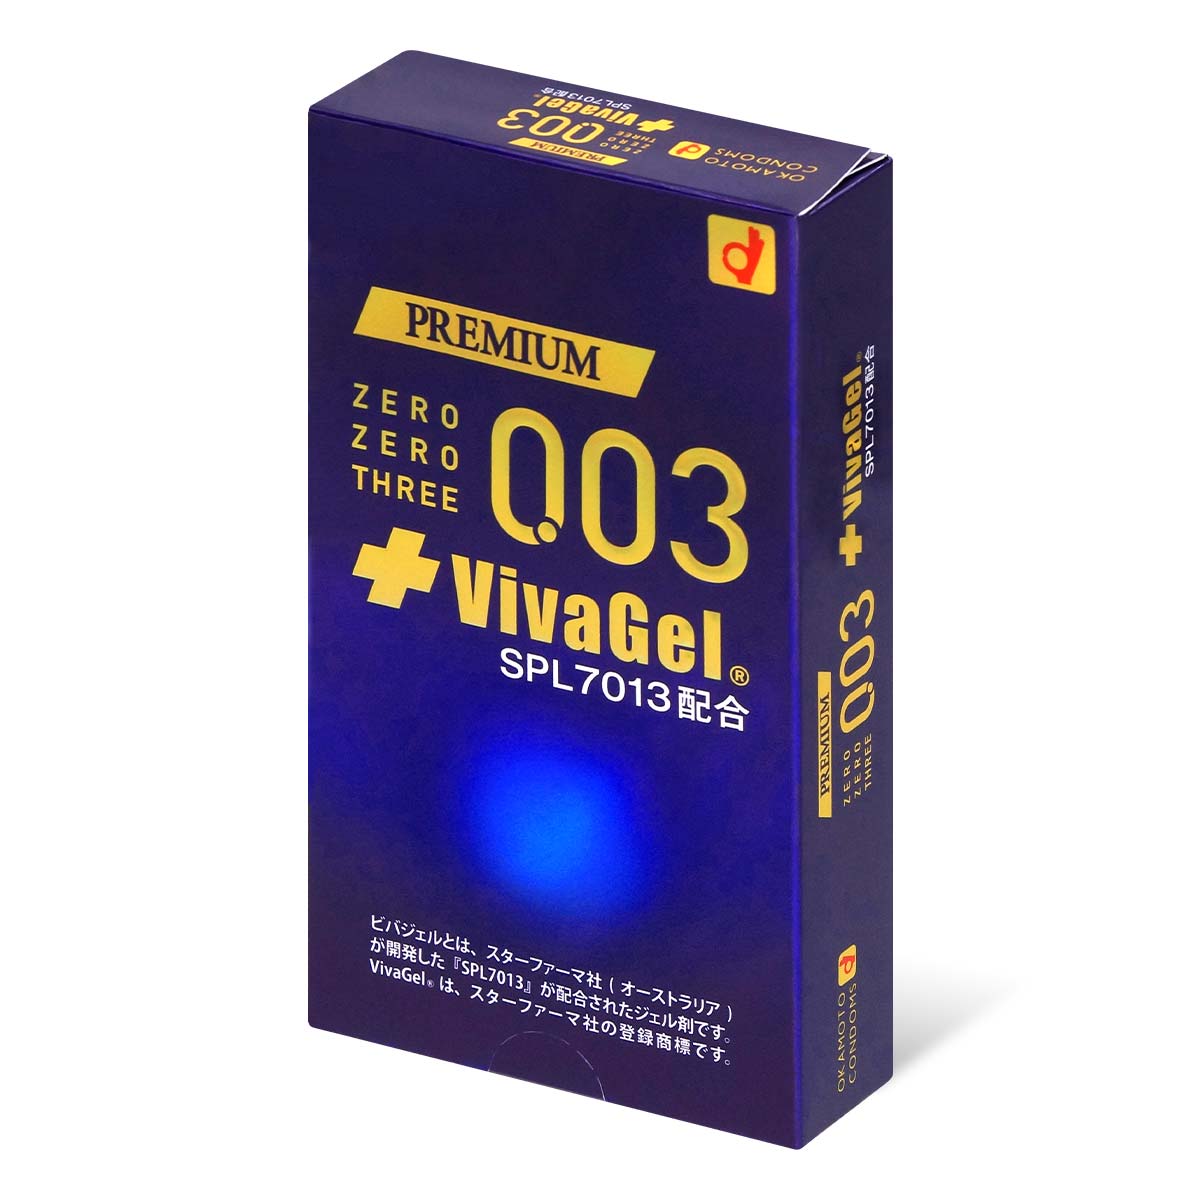 Zero Zero Three 0.03 Vivagel (Japan Edition) 10's Pack Latex Condom-p_1